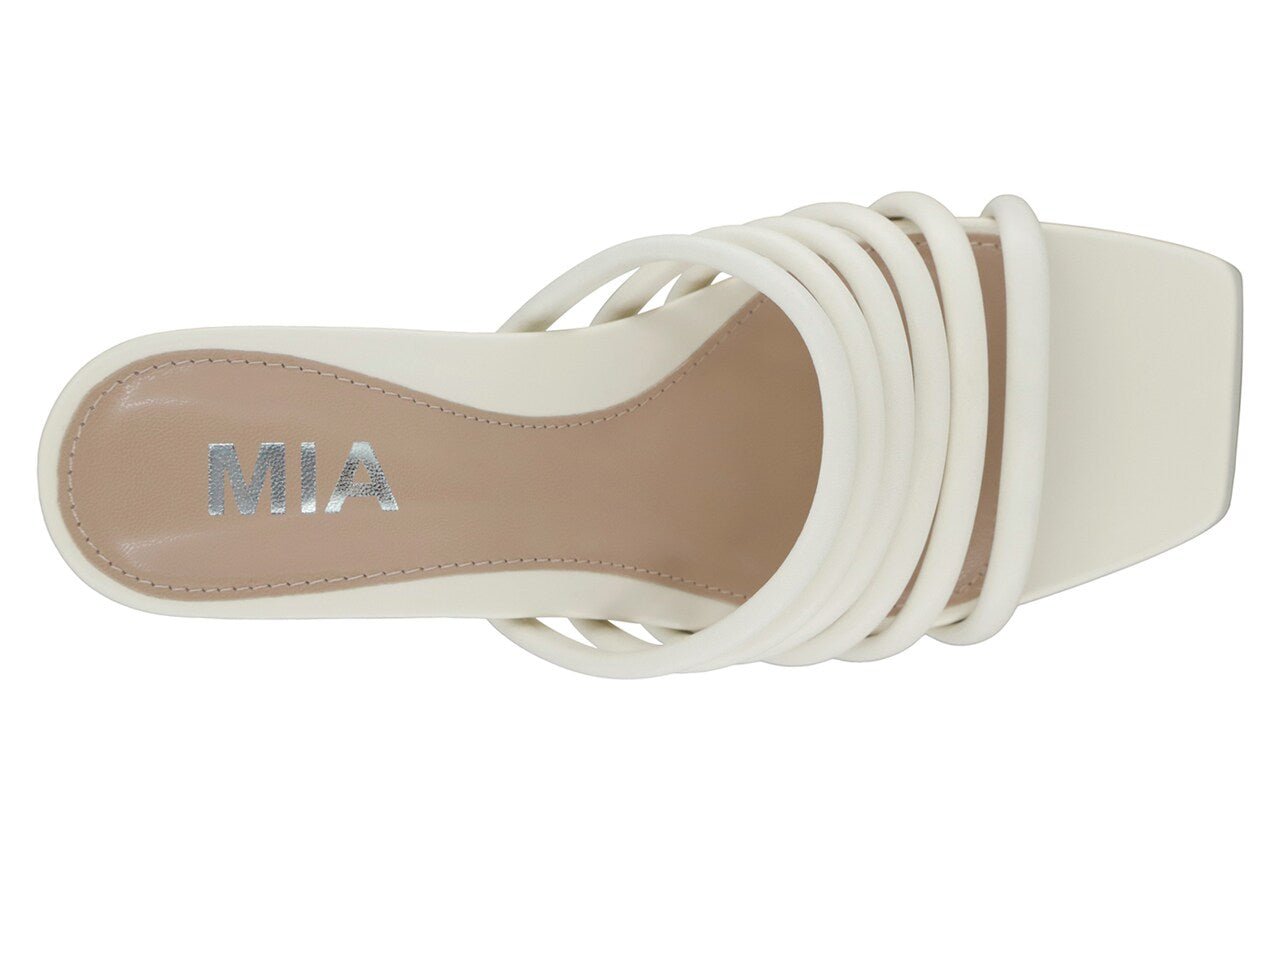 Mia Elea Platform Sandals (Bone) - Happily Ever Aften